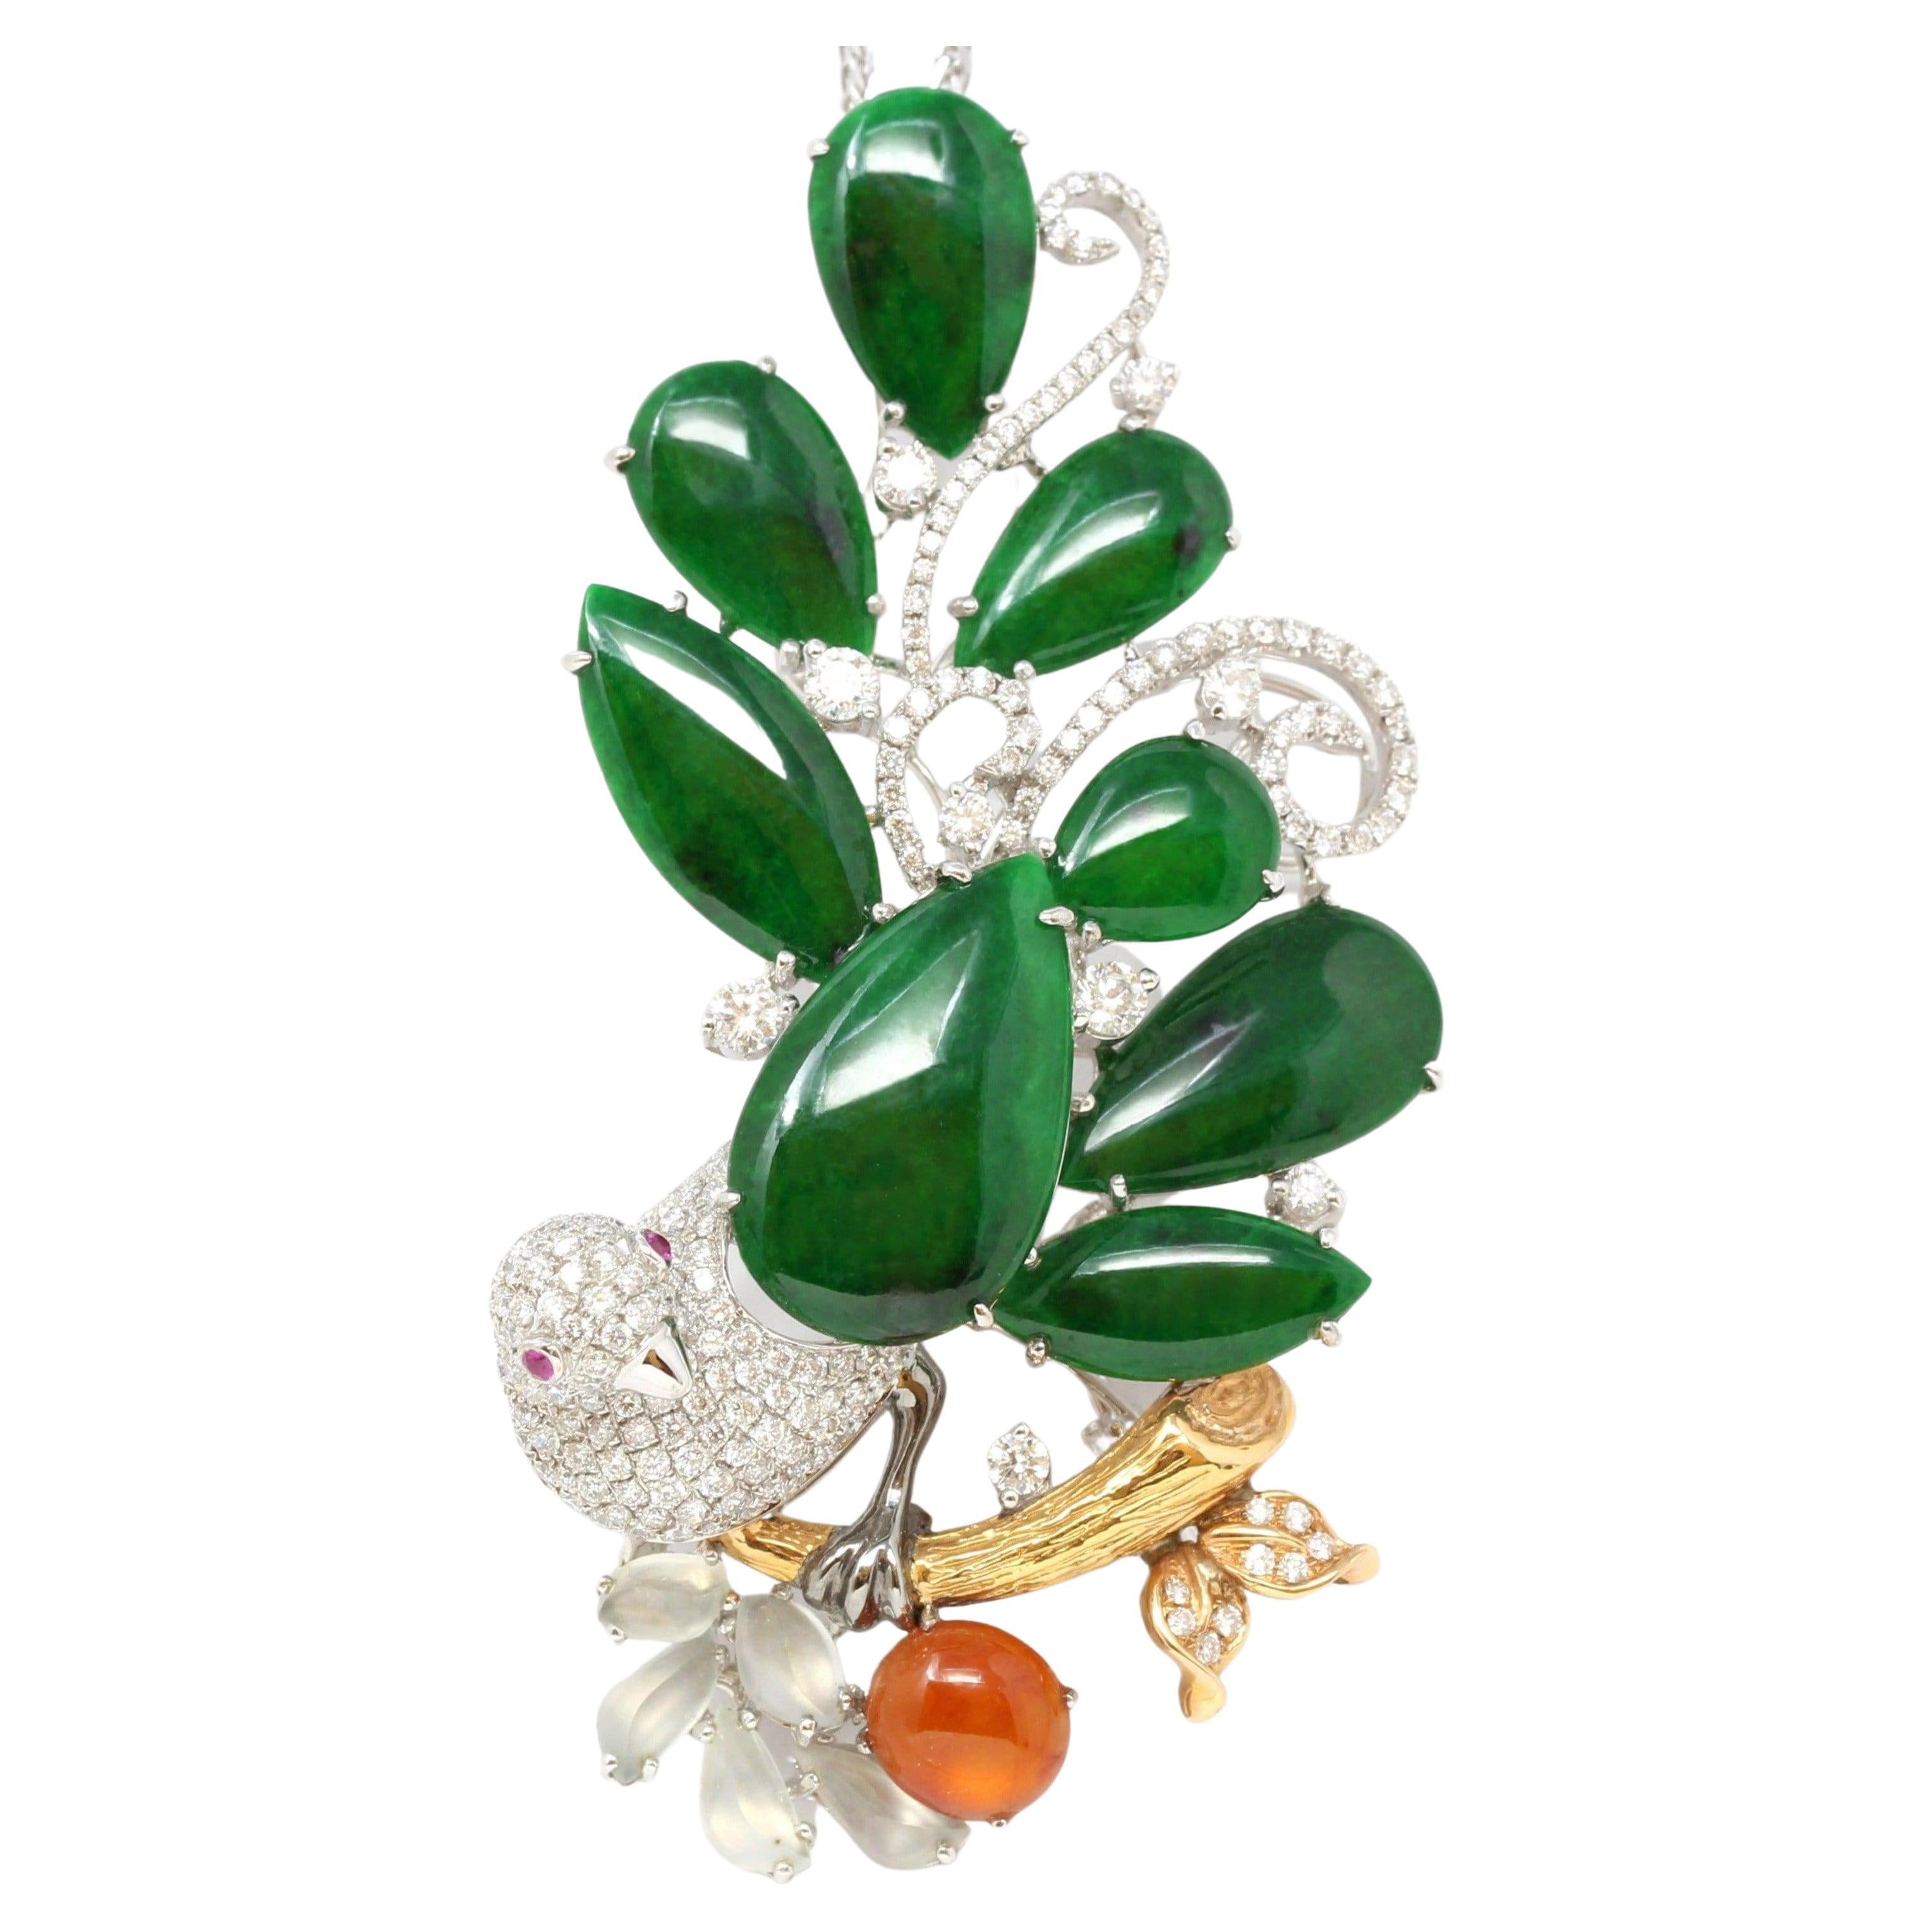 "Bird on A Tree" RealJade Co. Signature Old Mine Jadeite Jade Brooch Necklace For Sale